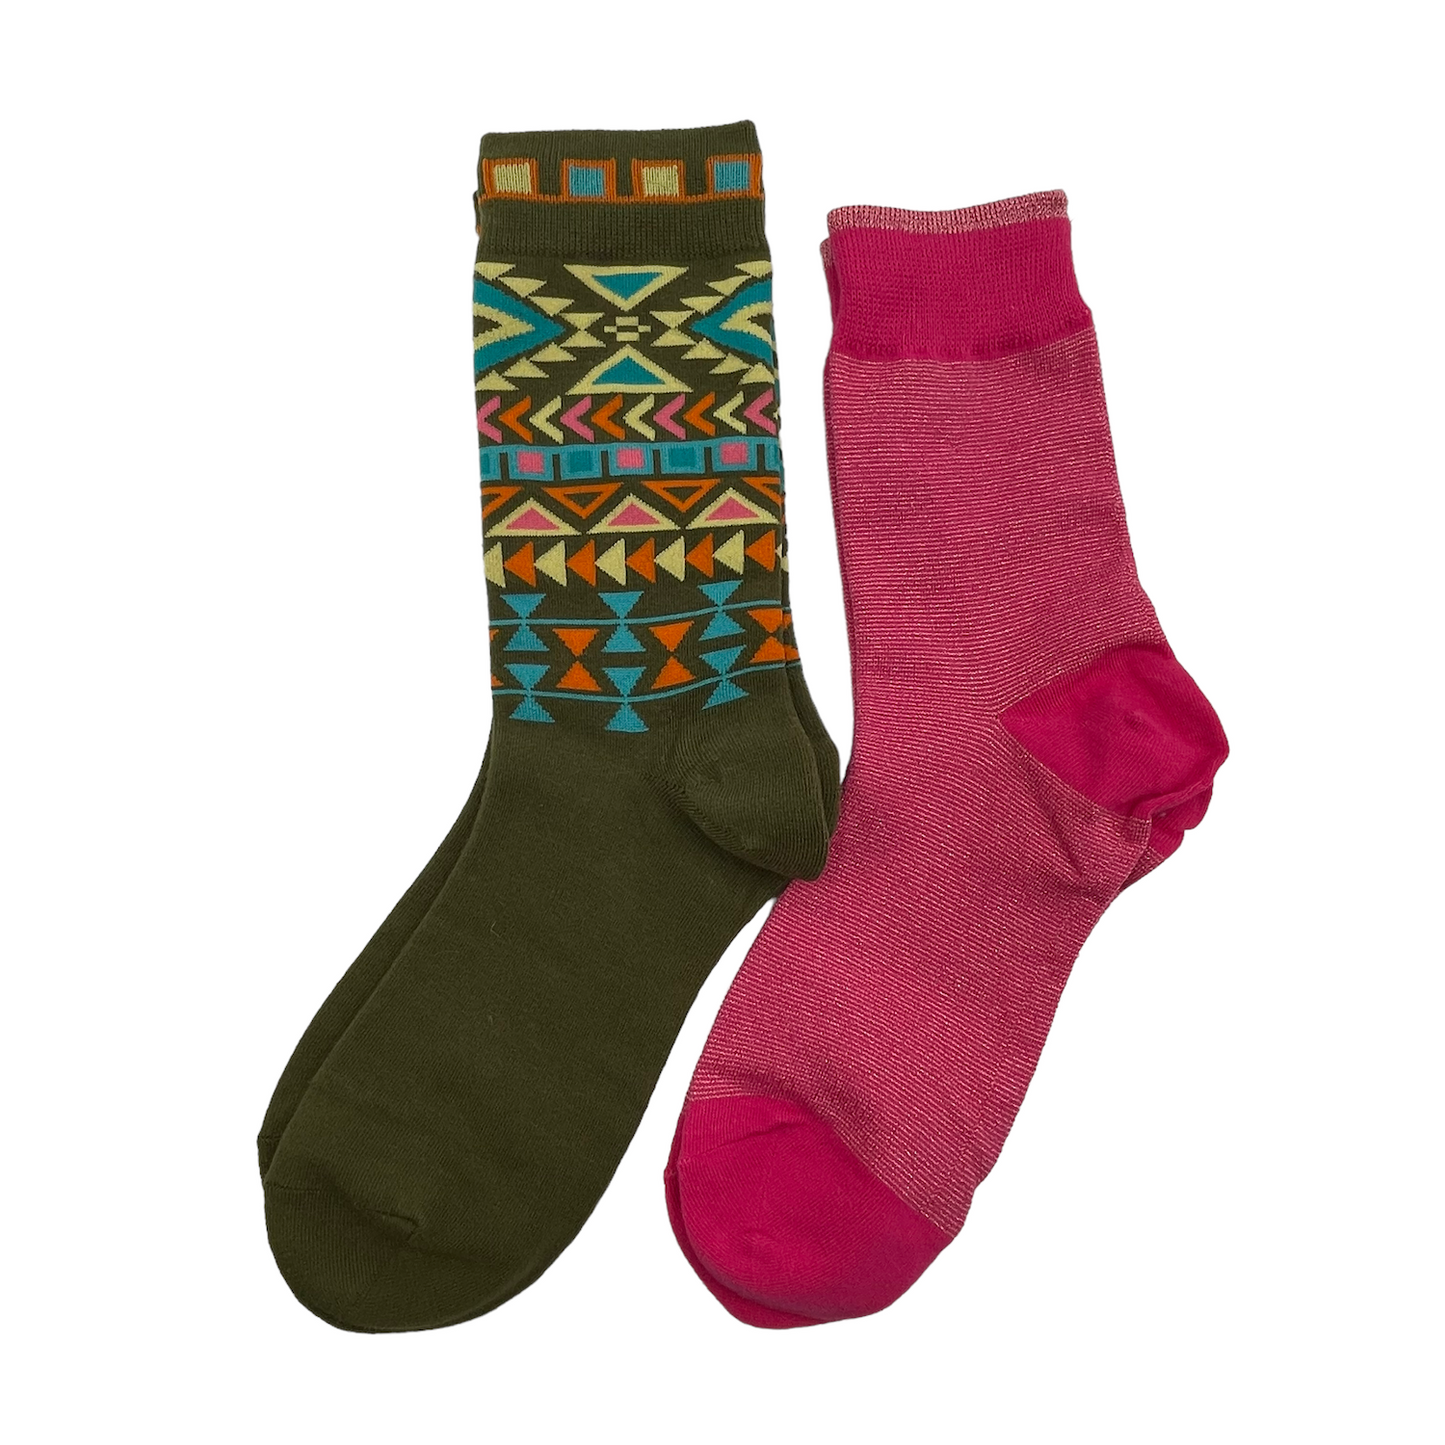 Oregon teal & Tokyo bright pink sock box duo